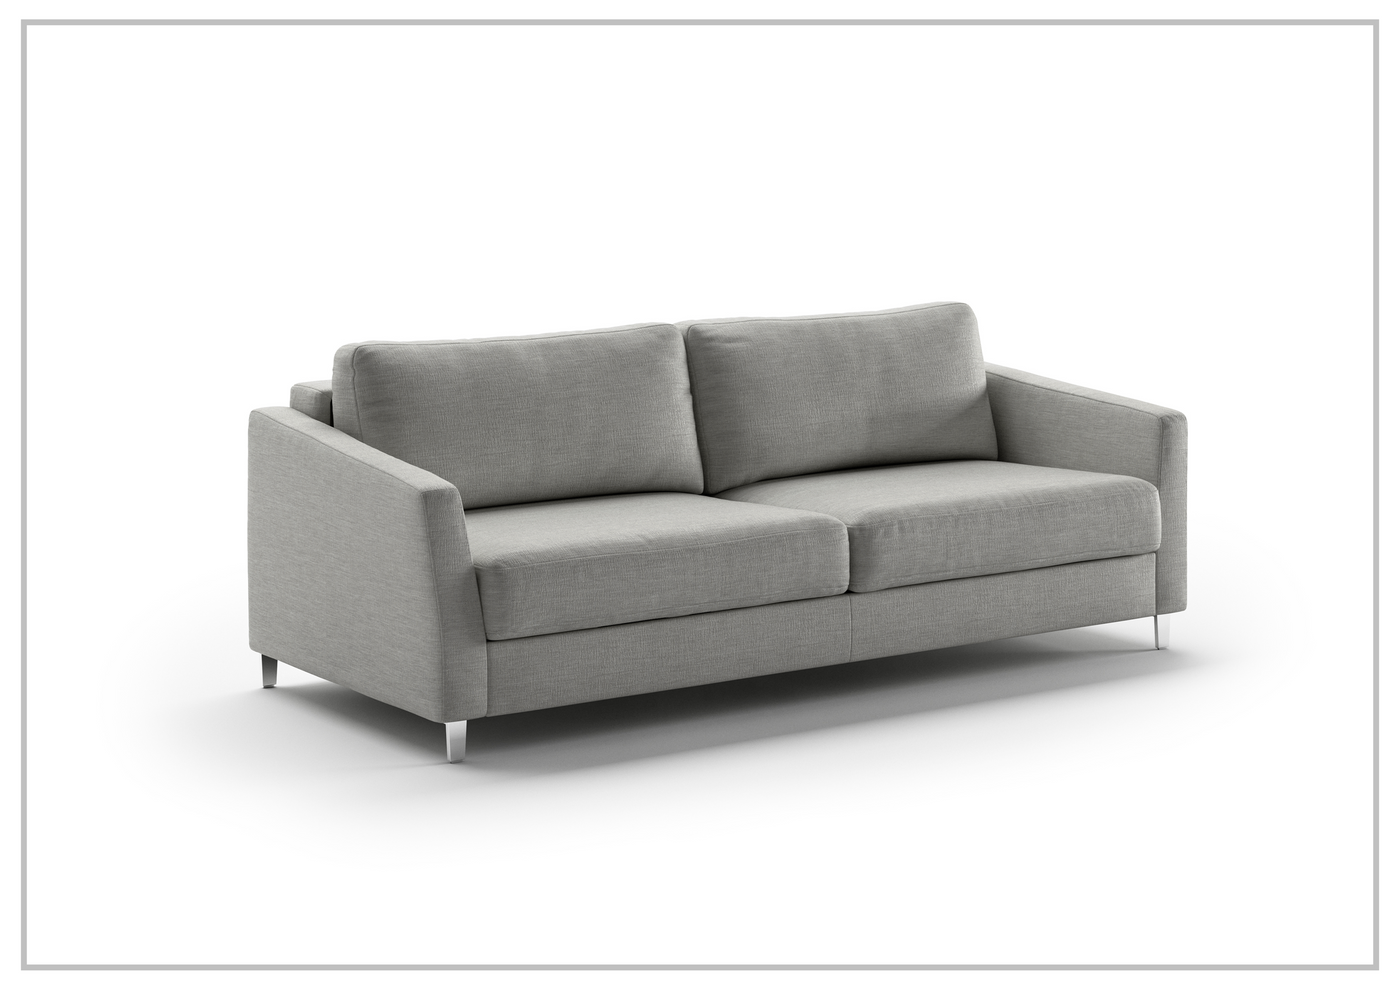 Luonto Monika King Sleeper Sofa With Wood/Chrome Legs